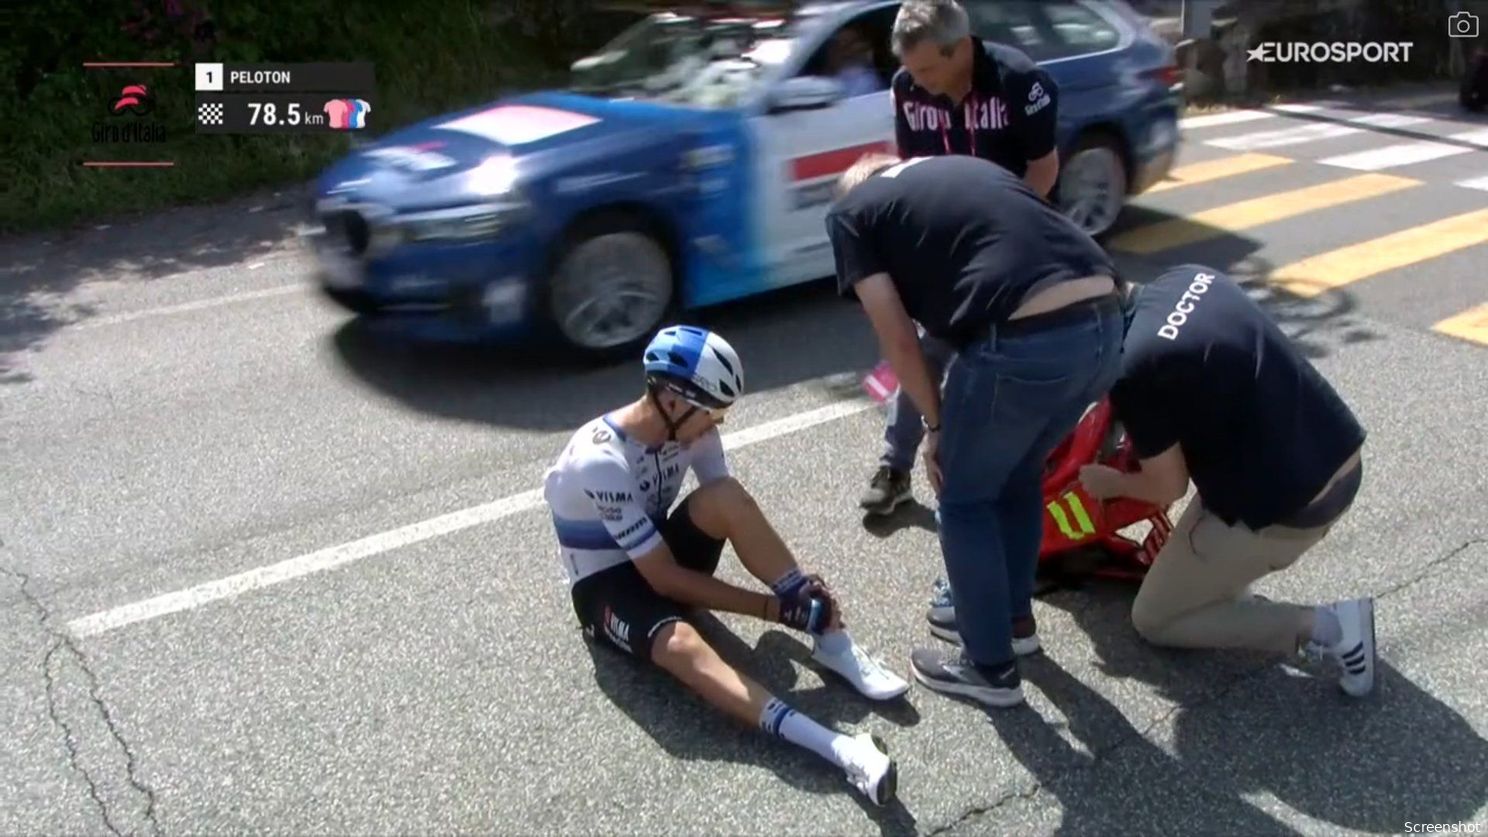 Visma | Lease a Bike reassuring regarding injured riders and Uijtdebroeks: "White Giro jersey is very high quality"